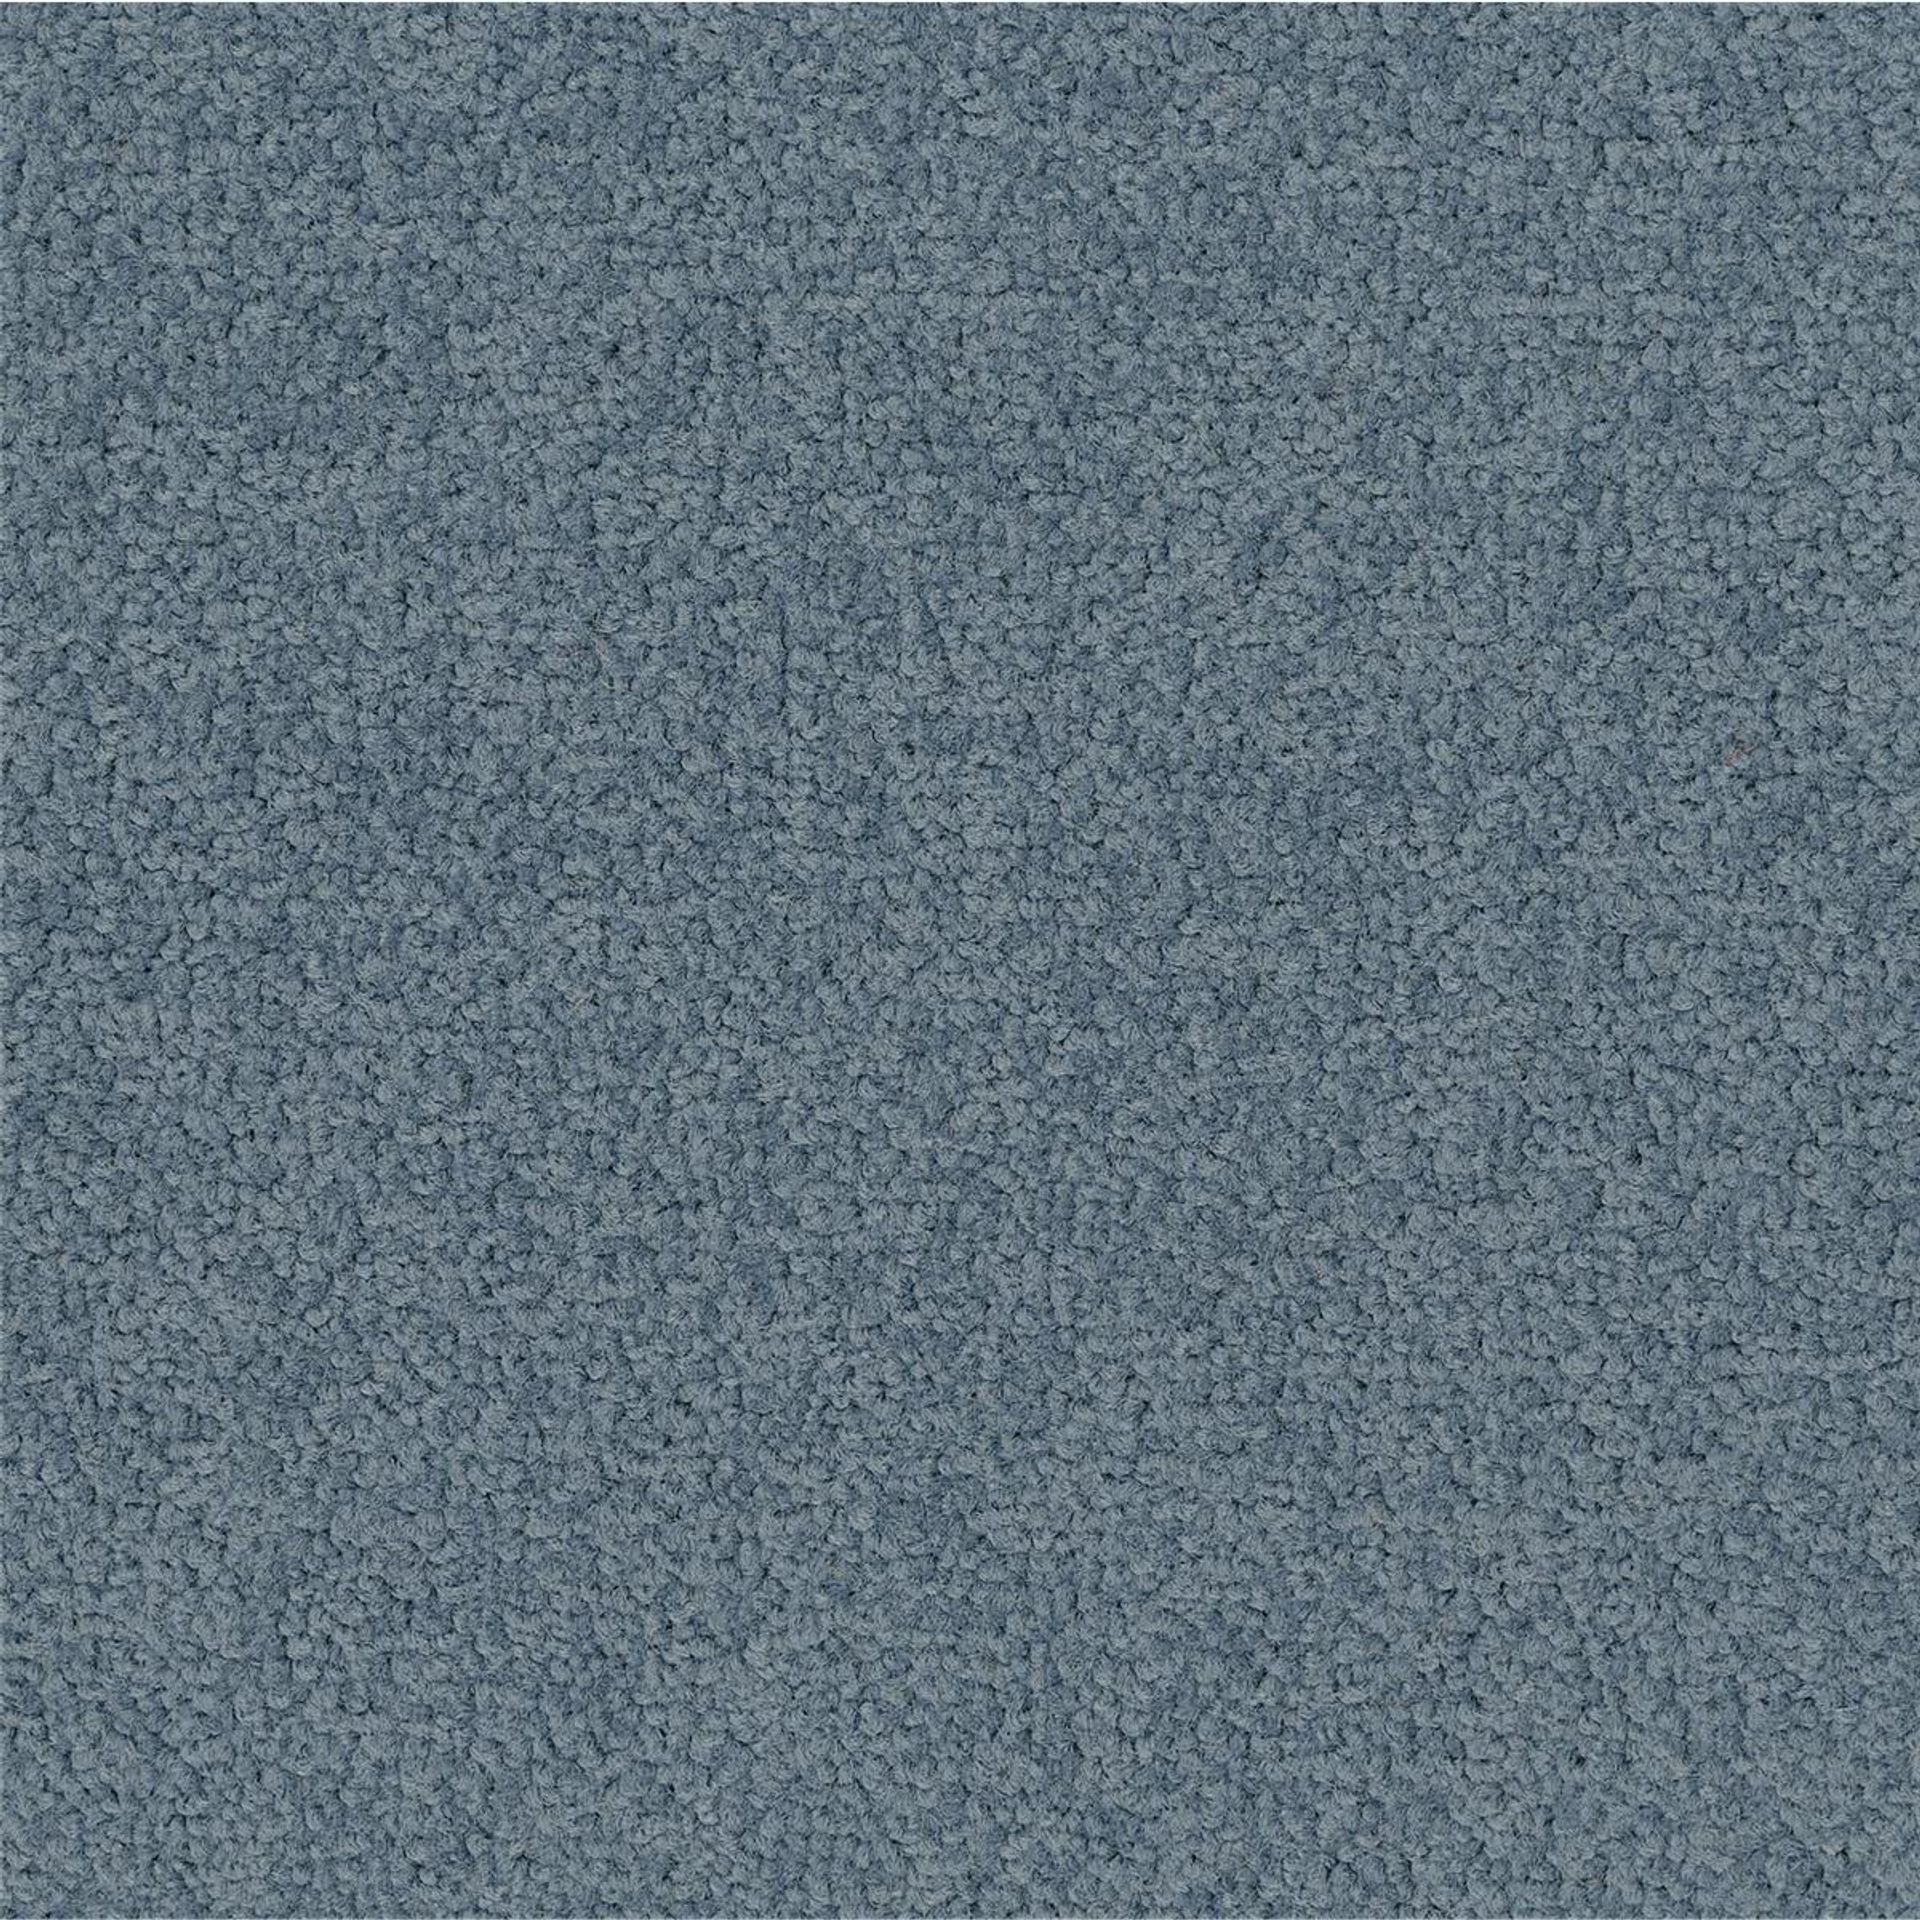 Teppichfliesen 50 x 50 cm Velours Palatino A072 8823 Blau Allover